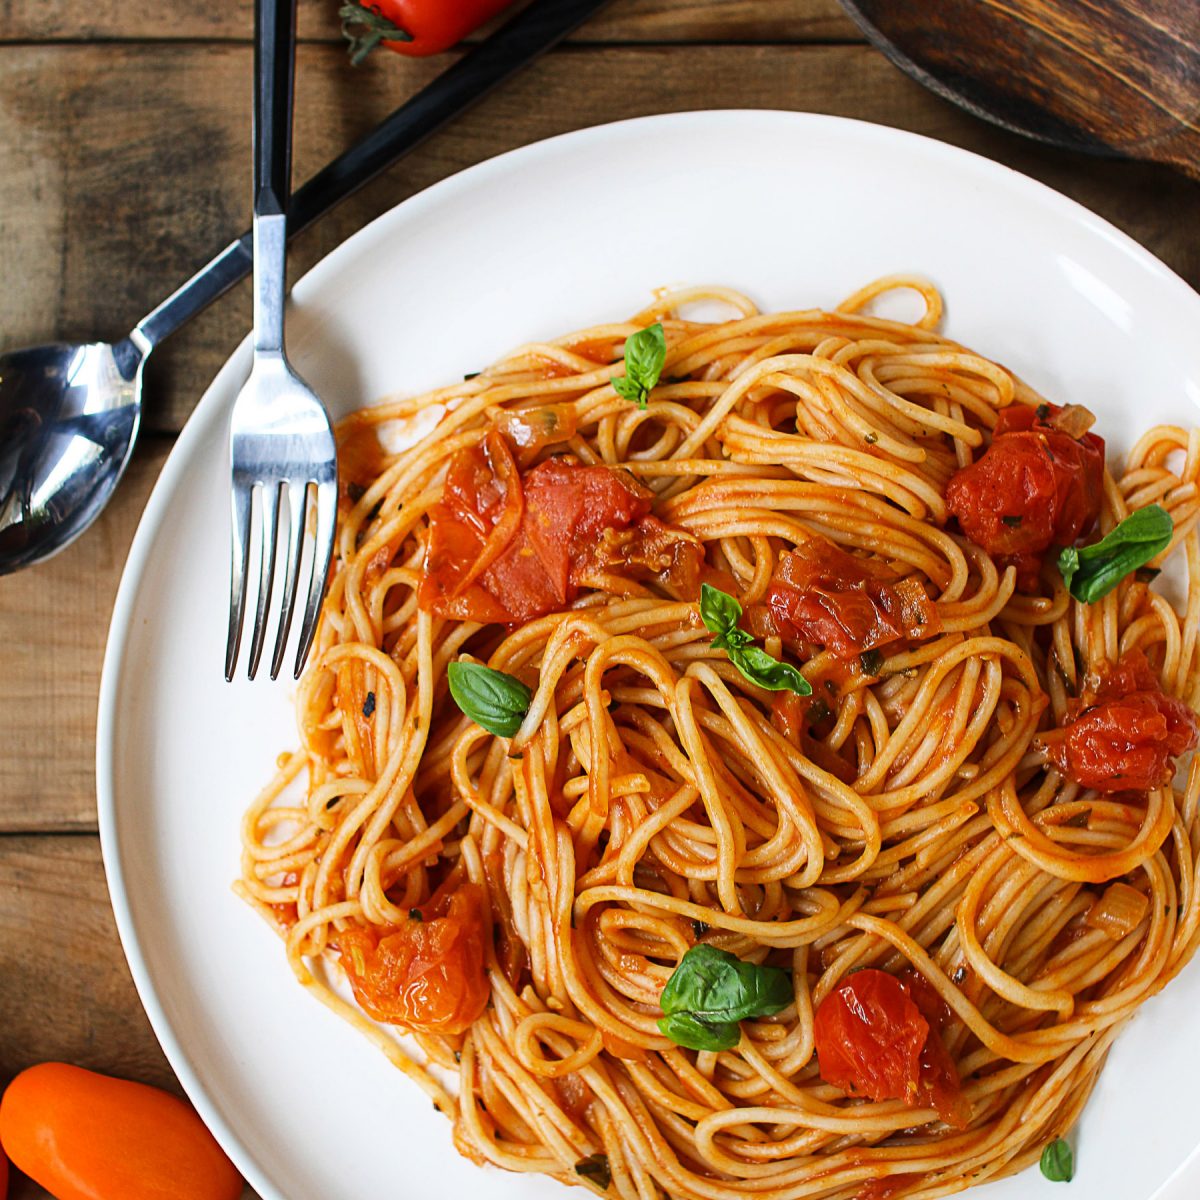 Classic Tomato Spaghetti With Basil Free Vegan Meal Plan Veahero